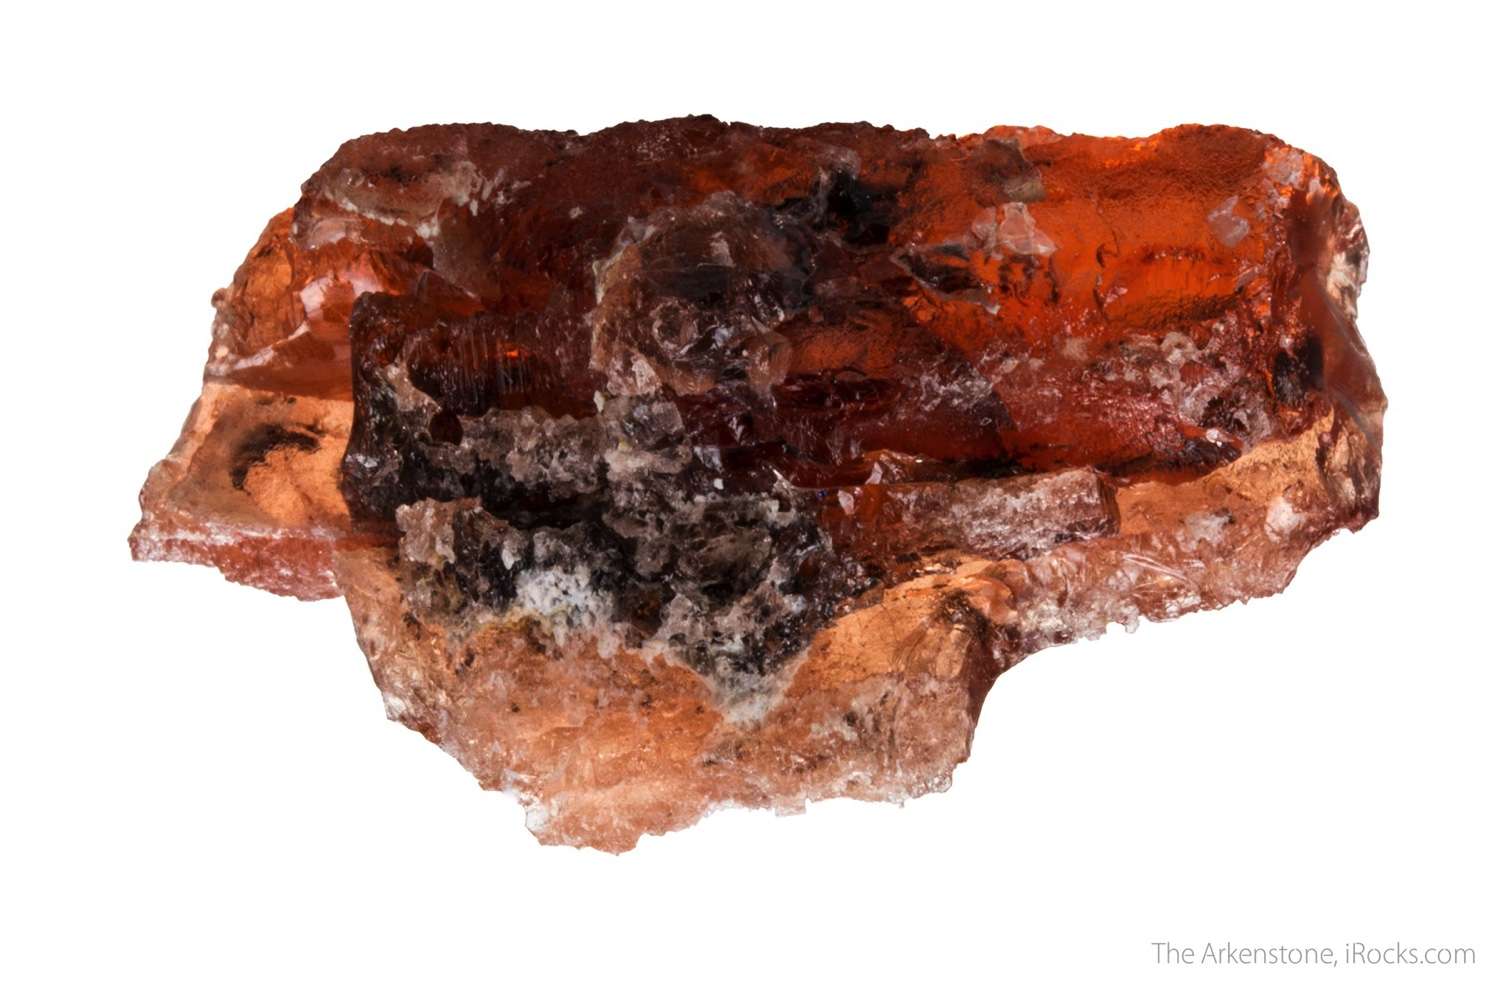 Rare gem triplite specimen discovered in Tucson.